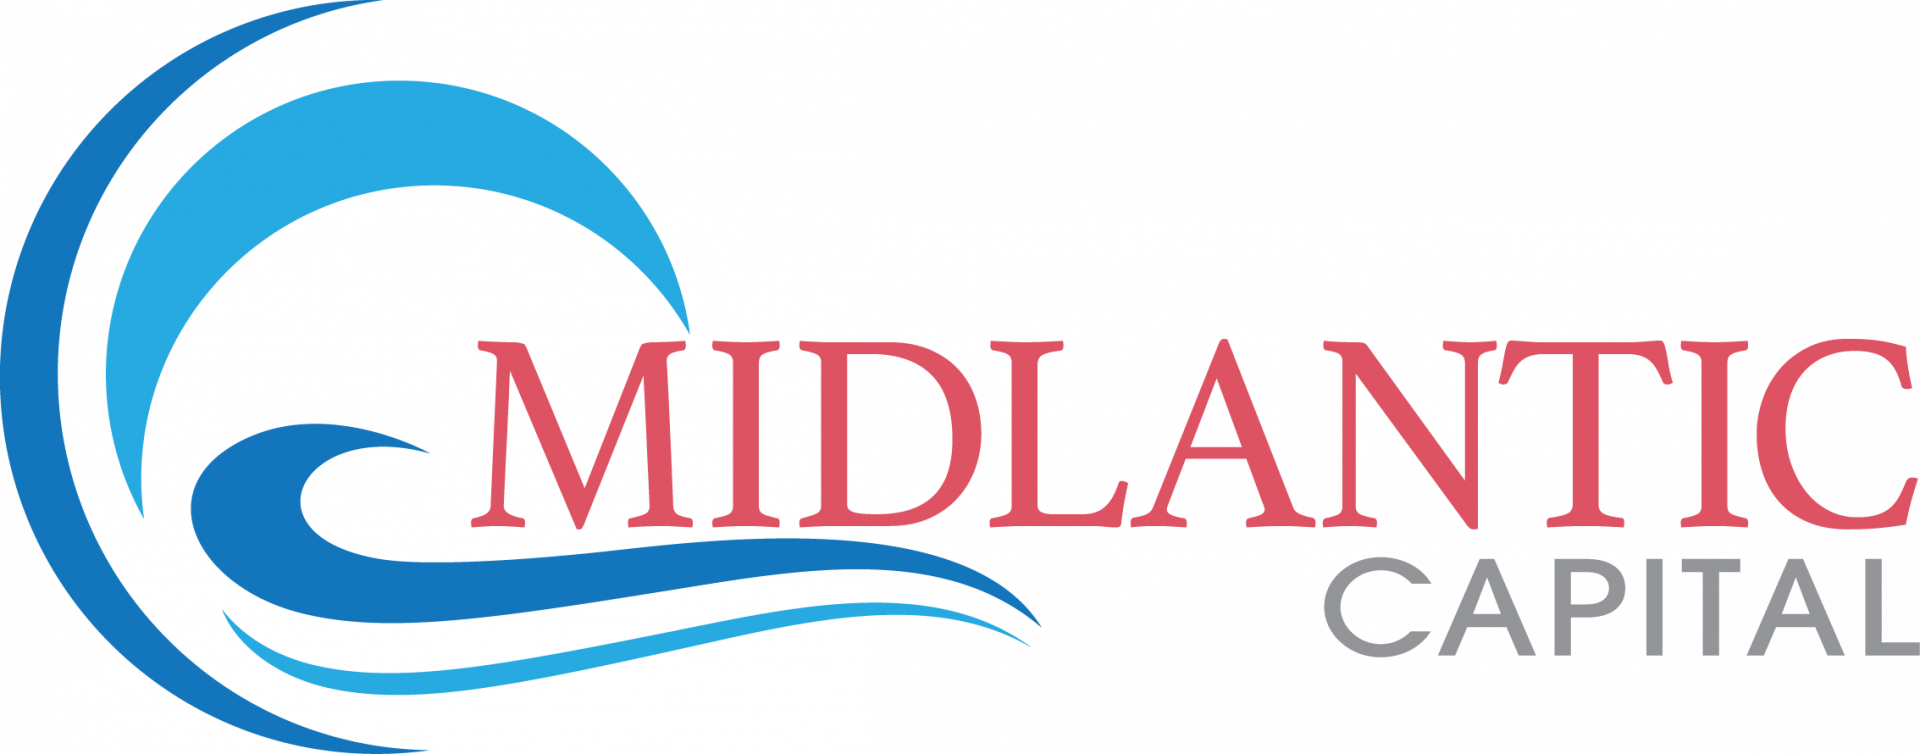 Midlantic Capital logo